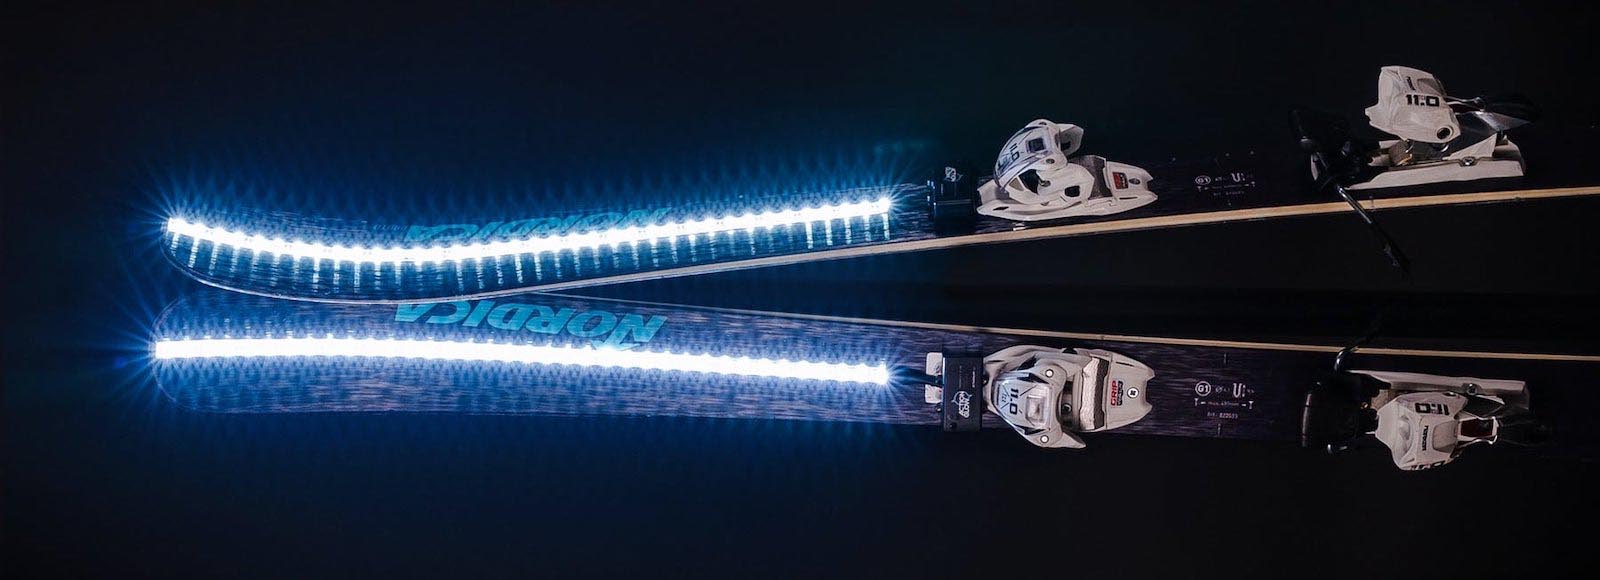 Actionglow Lights For Sports Equipment Shark Tank Ski